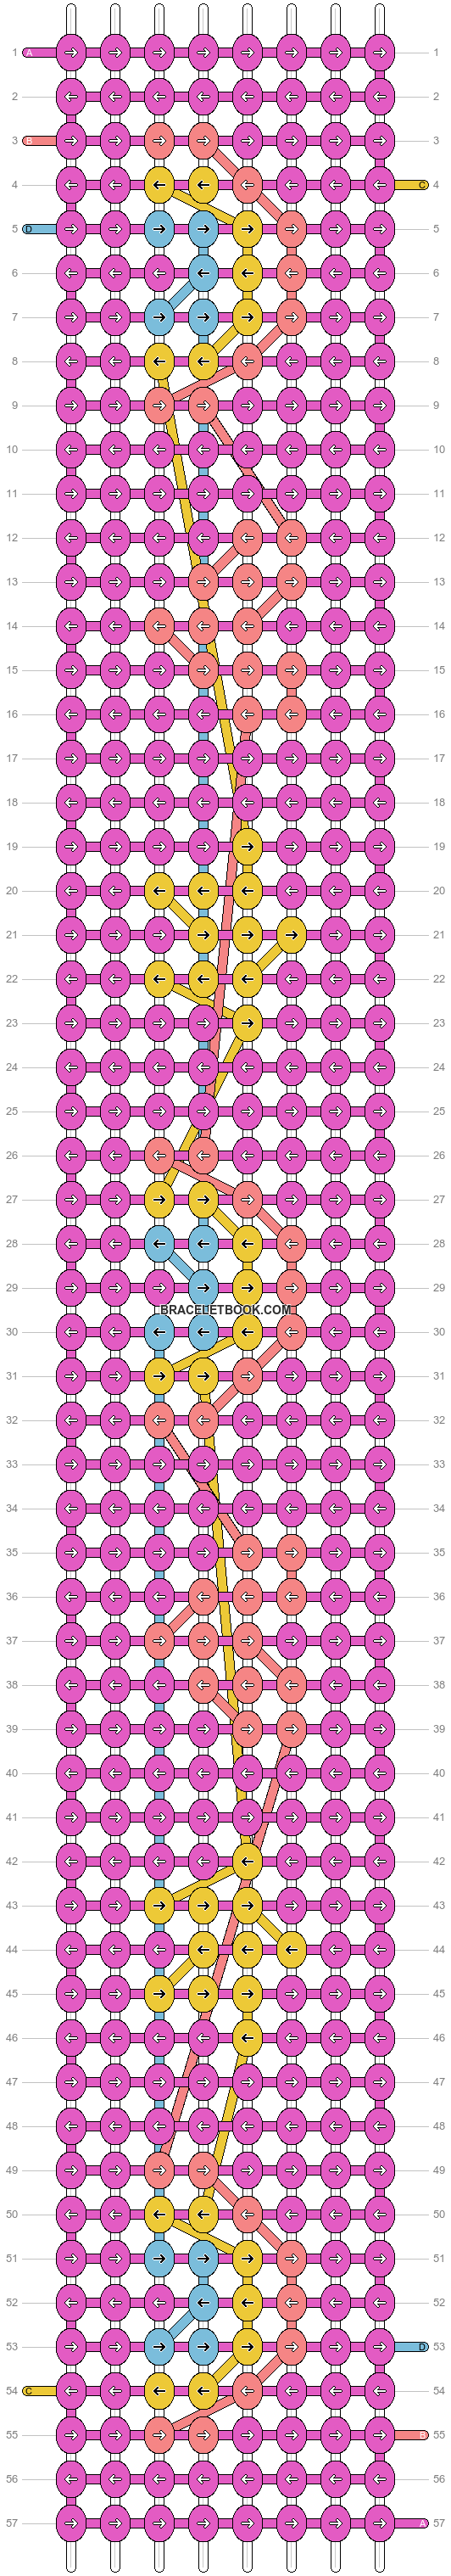 Alpha pattern #48856 variation #78916 pattern